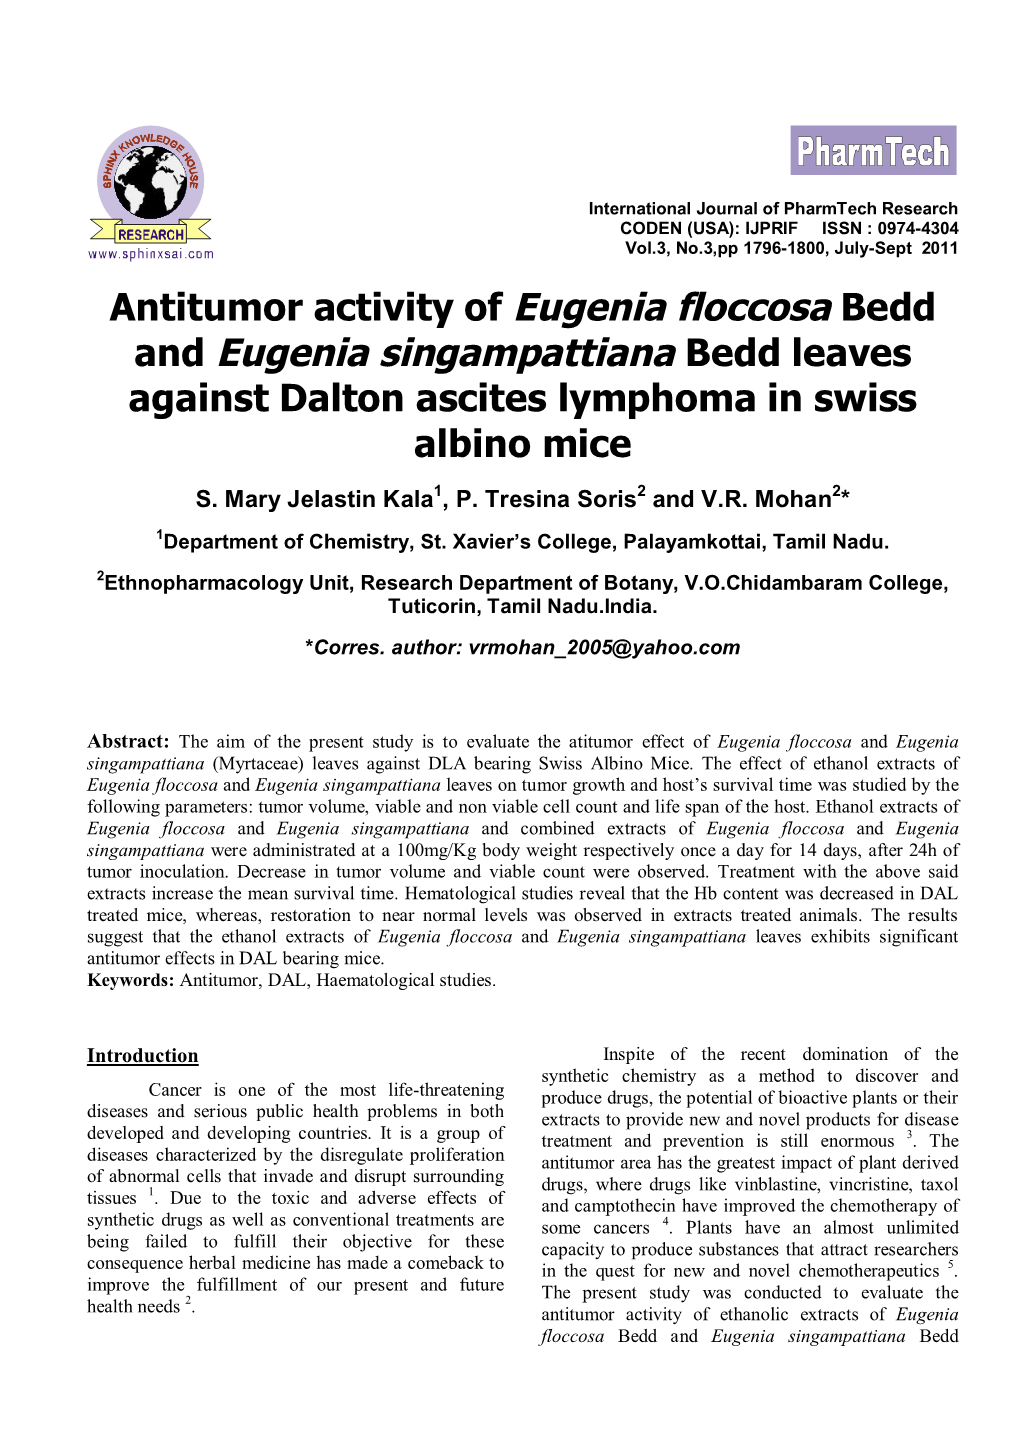 Antitumor Activity of Eugenia Floccosa Bedd and Eugenia Singampattiana Bedd Leaves Against Dalton Ascites Lymphoma in Swiss Albino Mice S